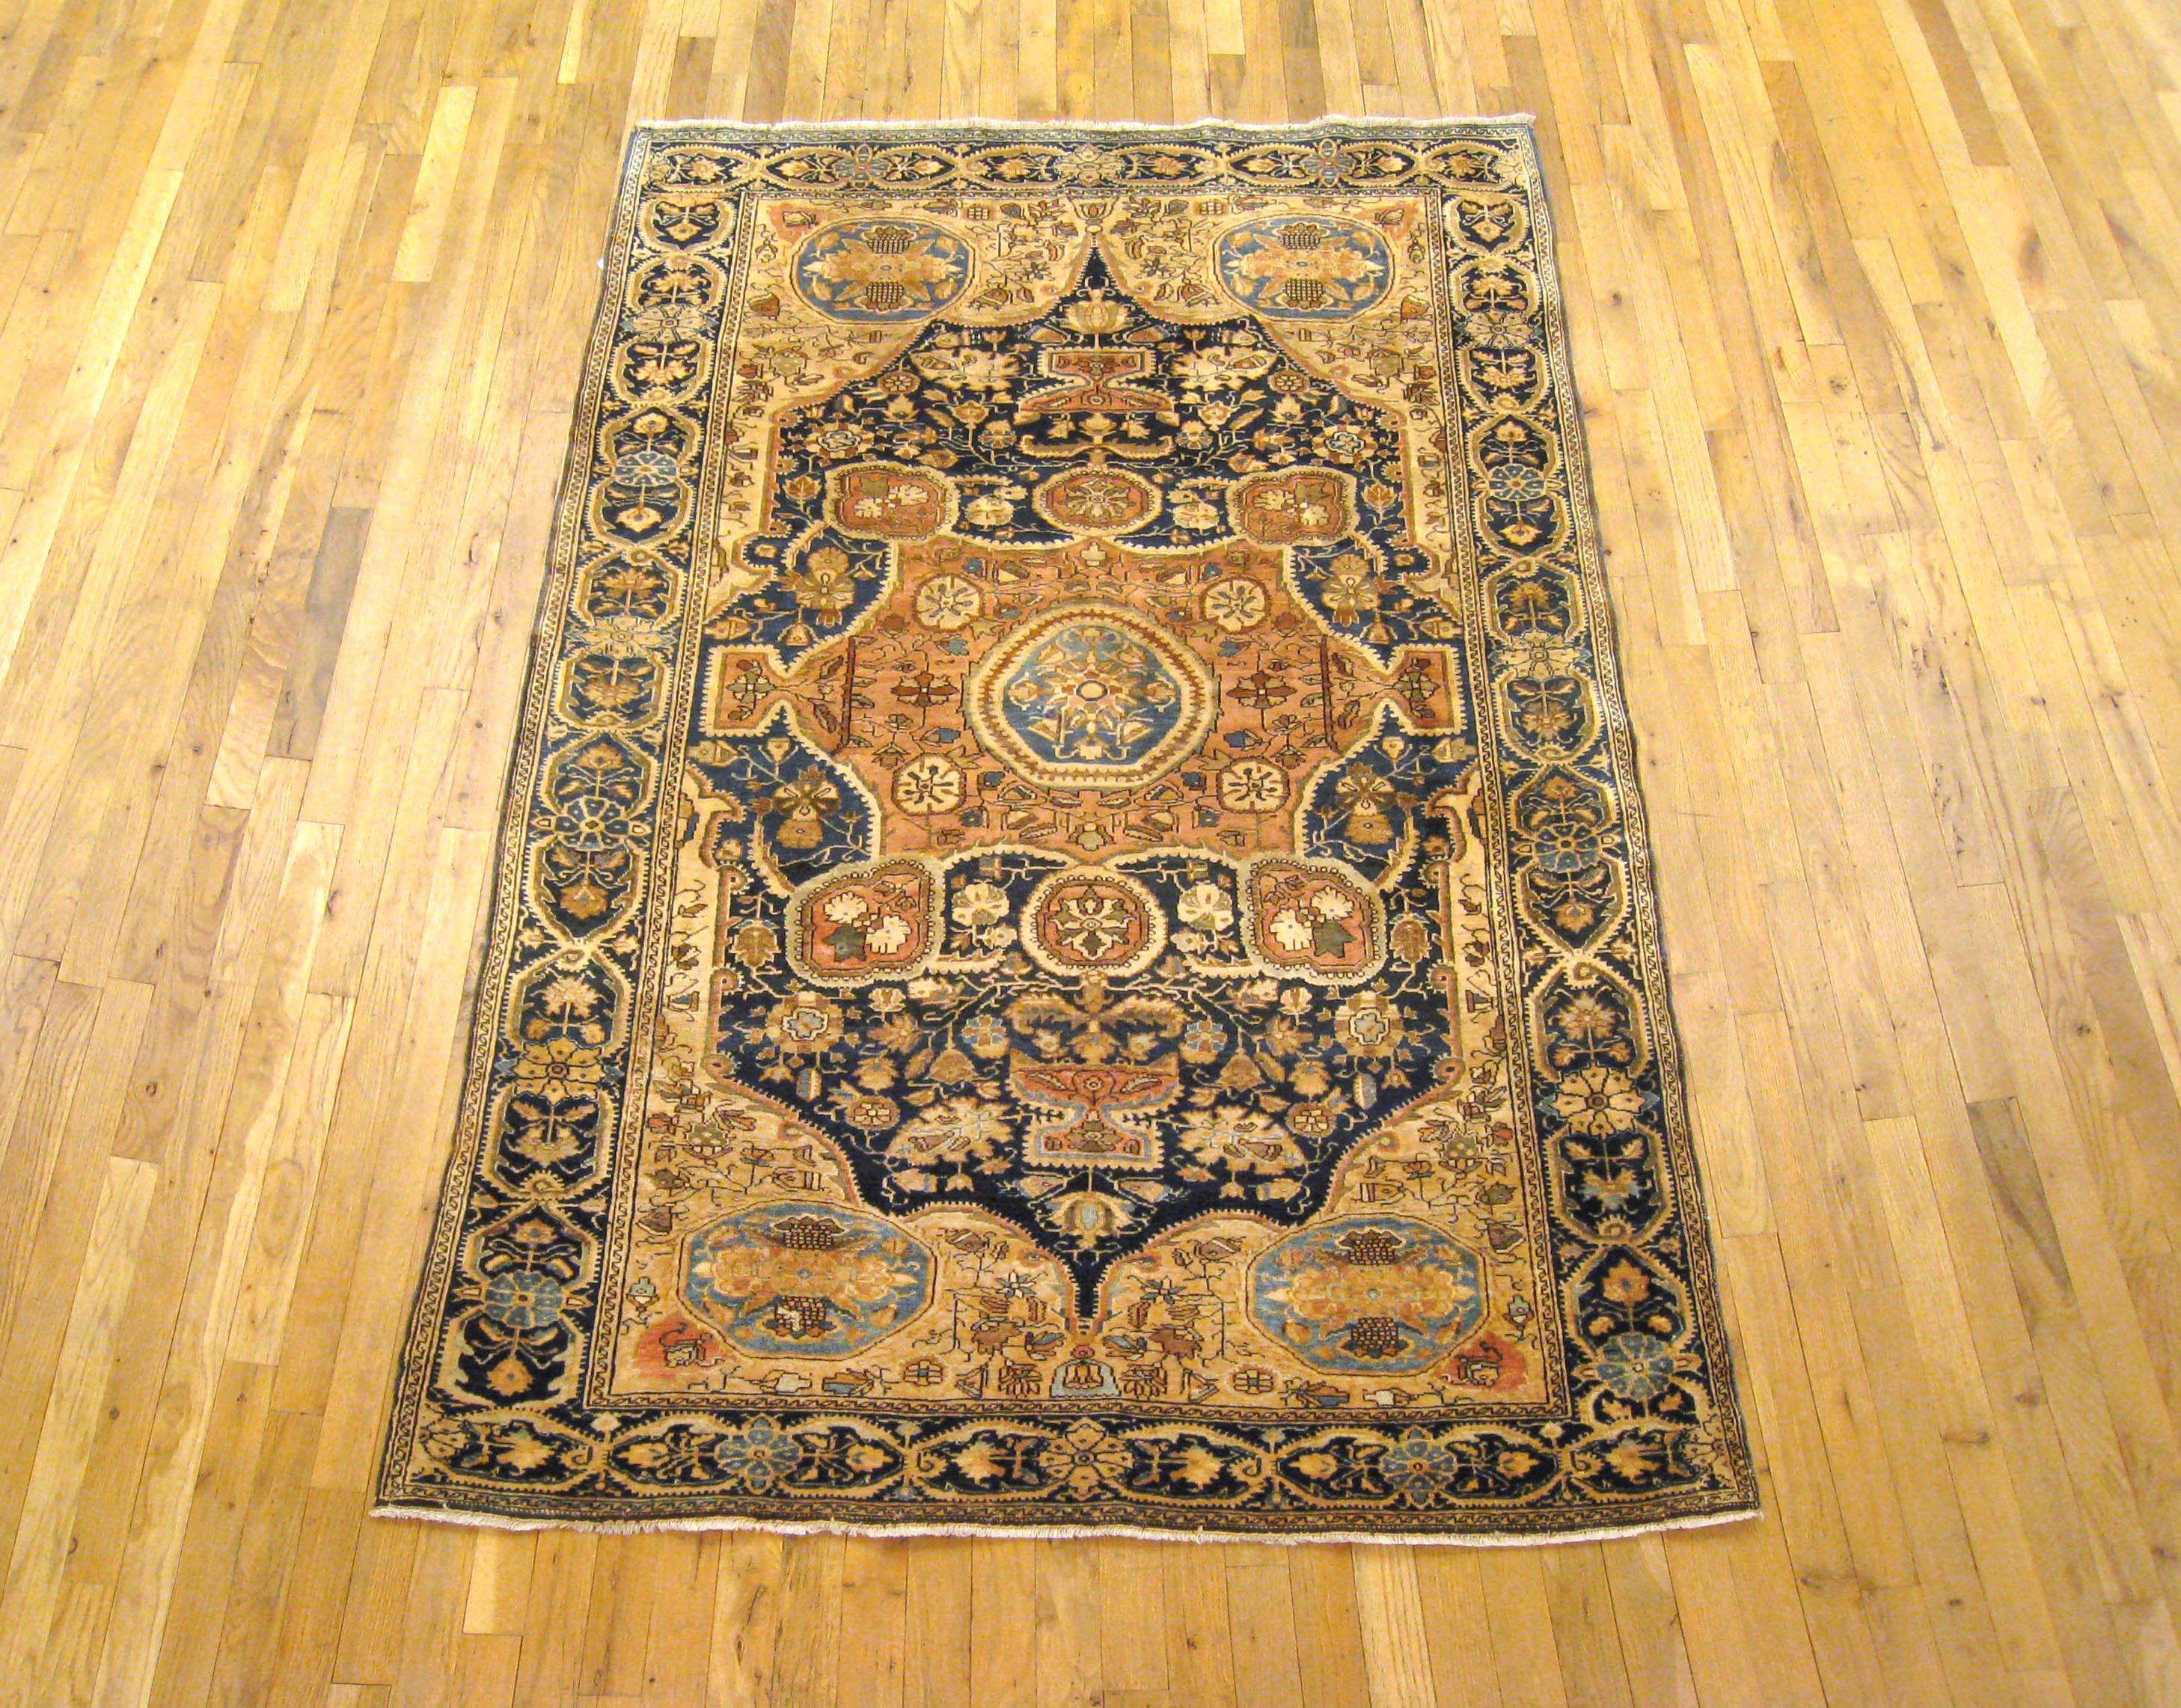 Antique Ferahan Sarouk Oriental Rug, circa 1900, Small size

An antique Ferahan Sarouk oriental rug, size 6'5